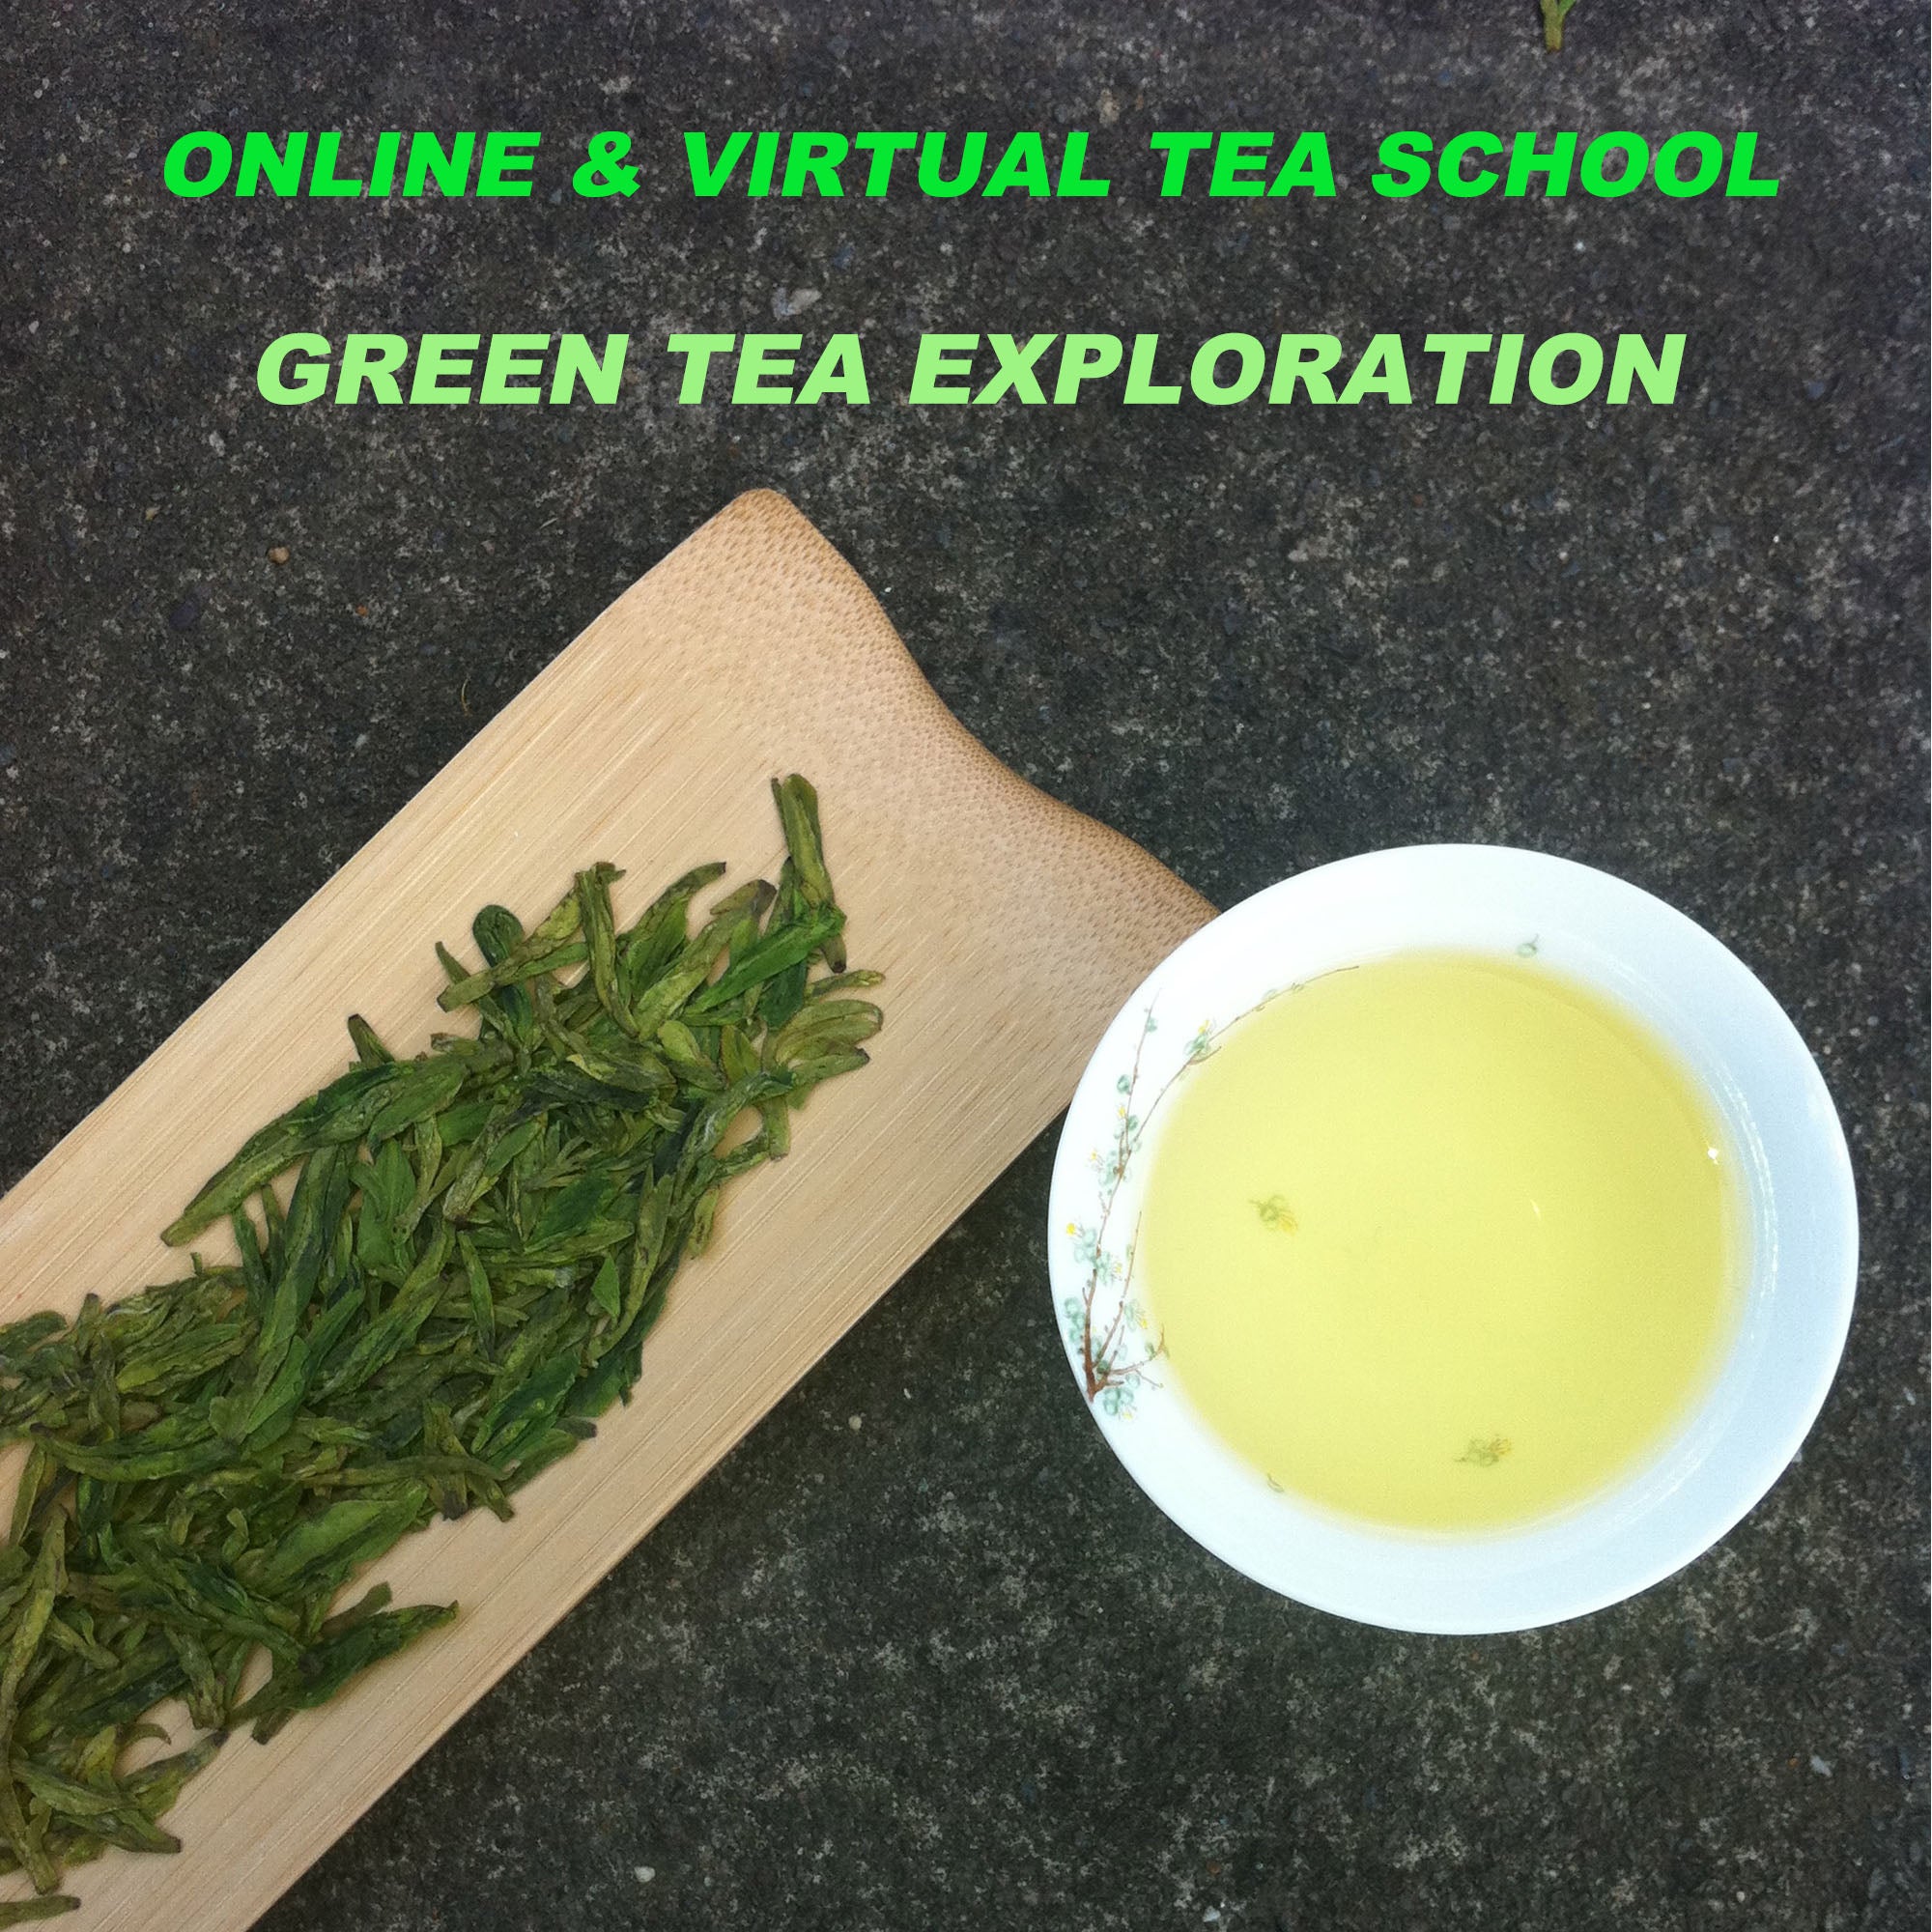 VIRTUAL GREEN TEA EXPLORATION